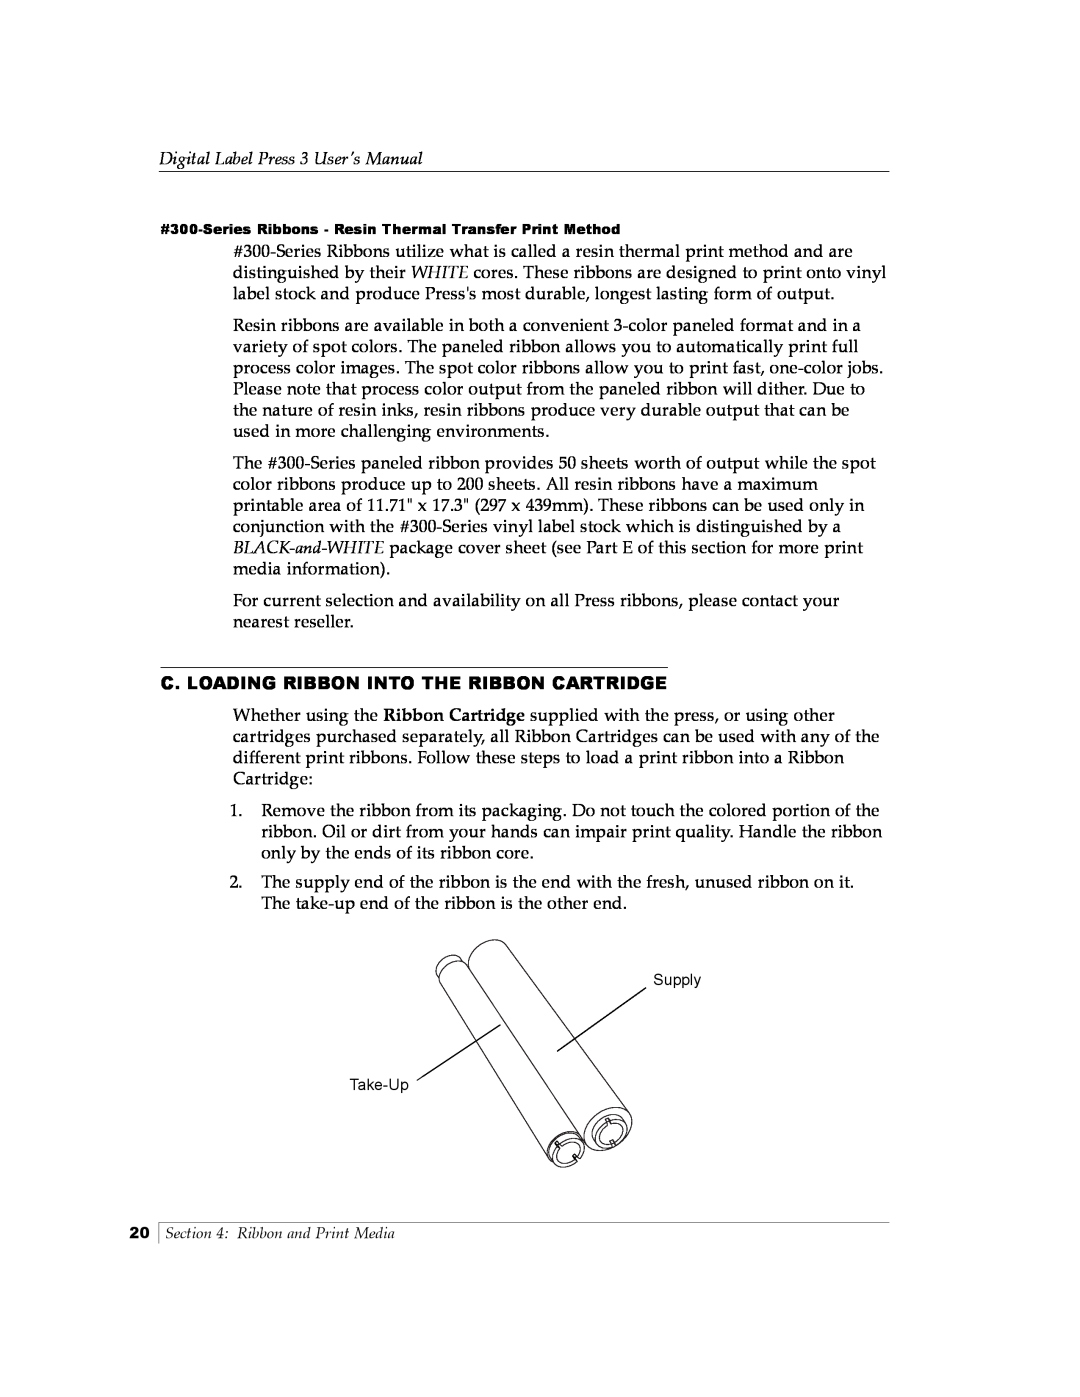 Primera Technology 510212 C. Loading Ribbon Into The Ribbon Cartridge, Digital Label Press 3 User’s Manual, Supply Take-Up 